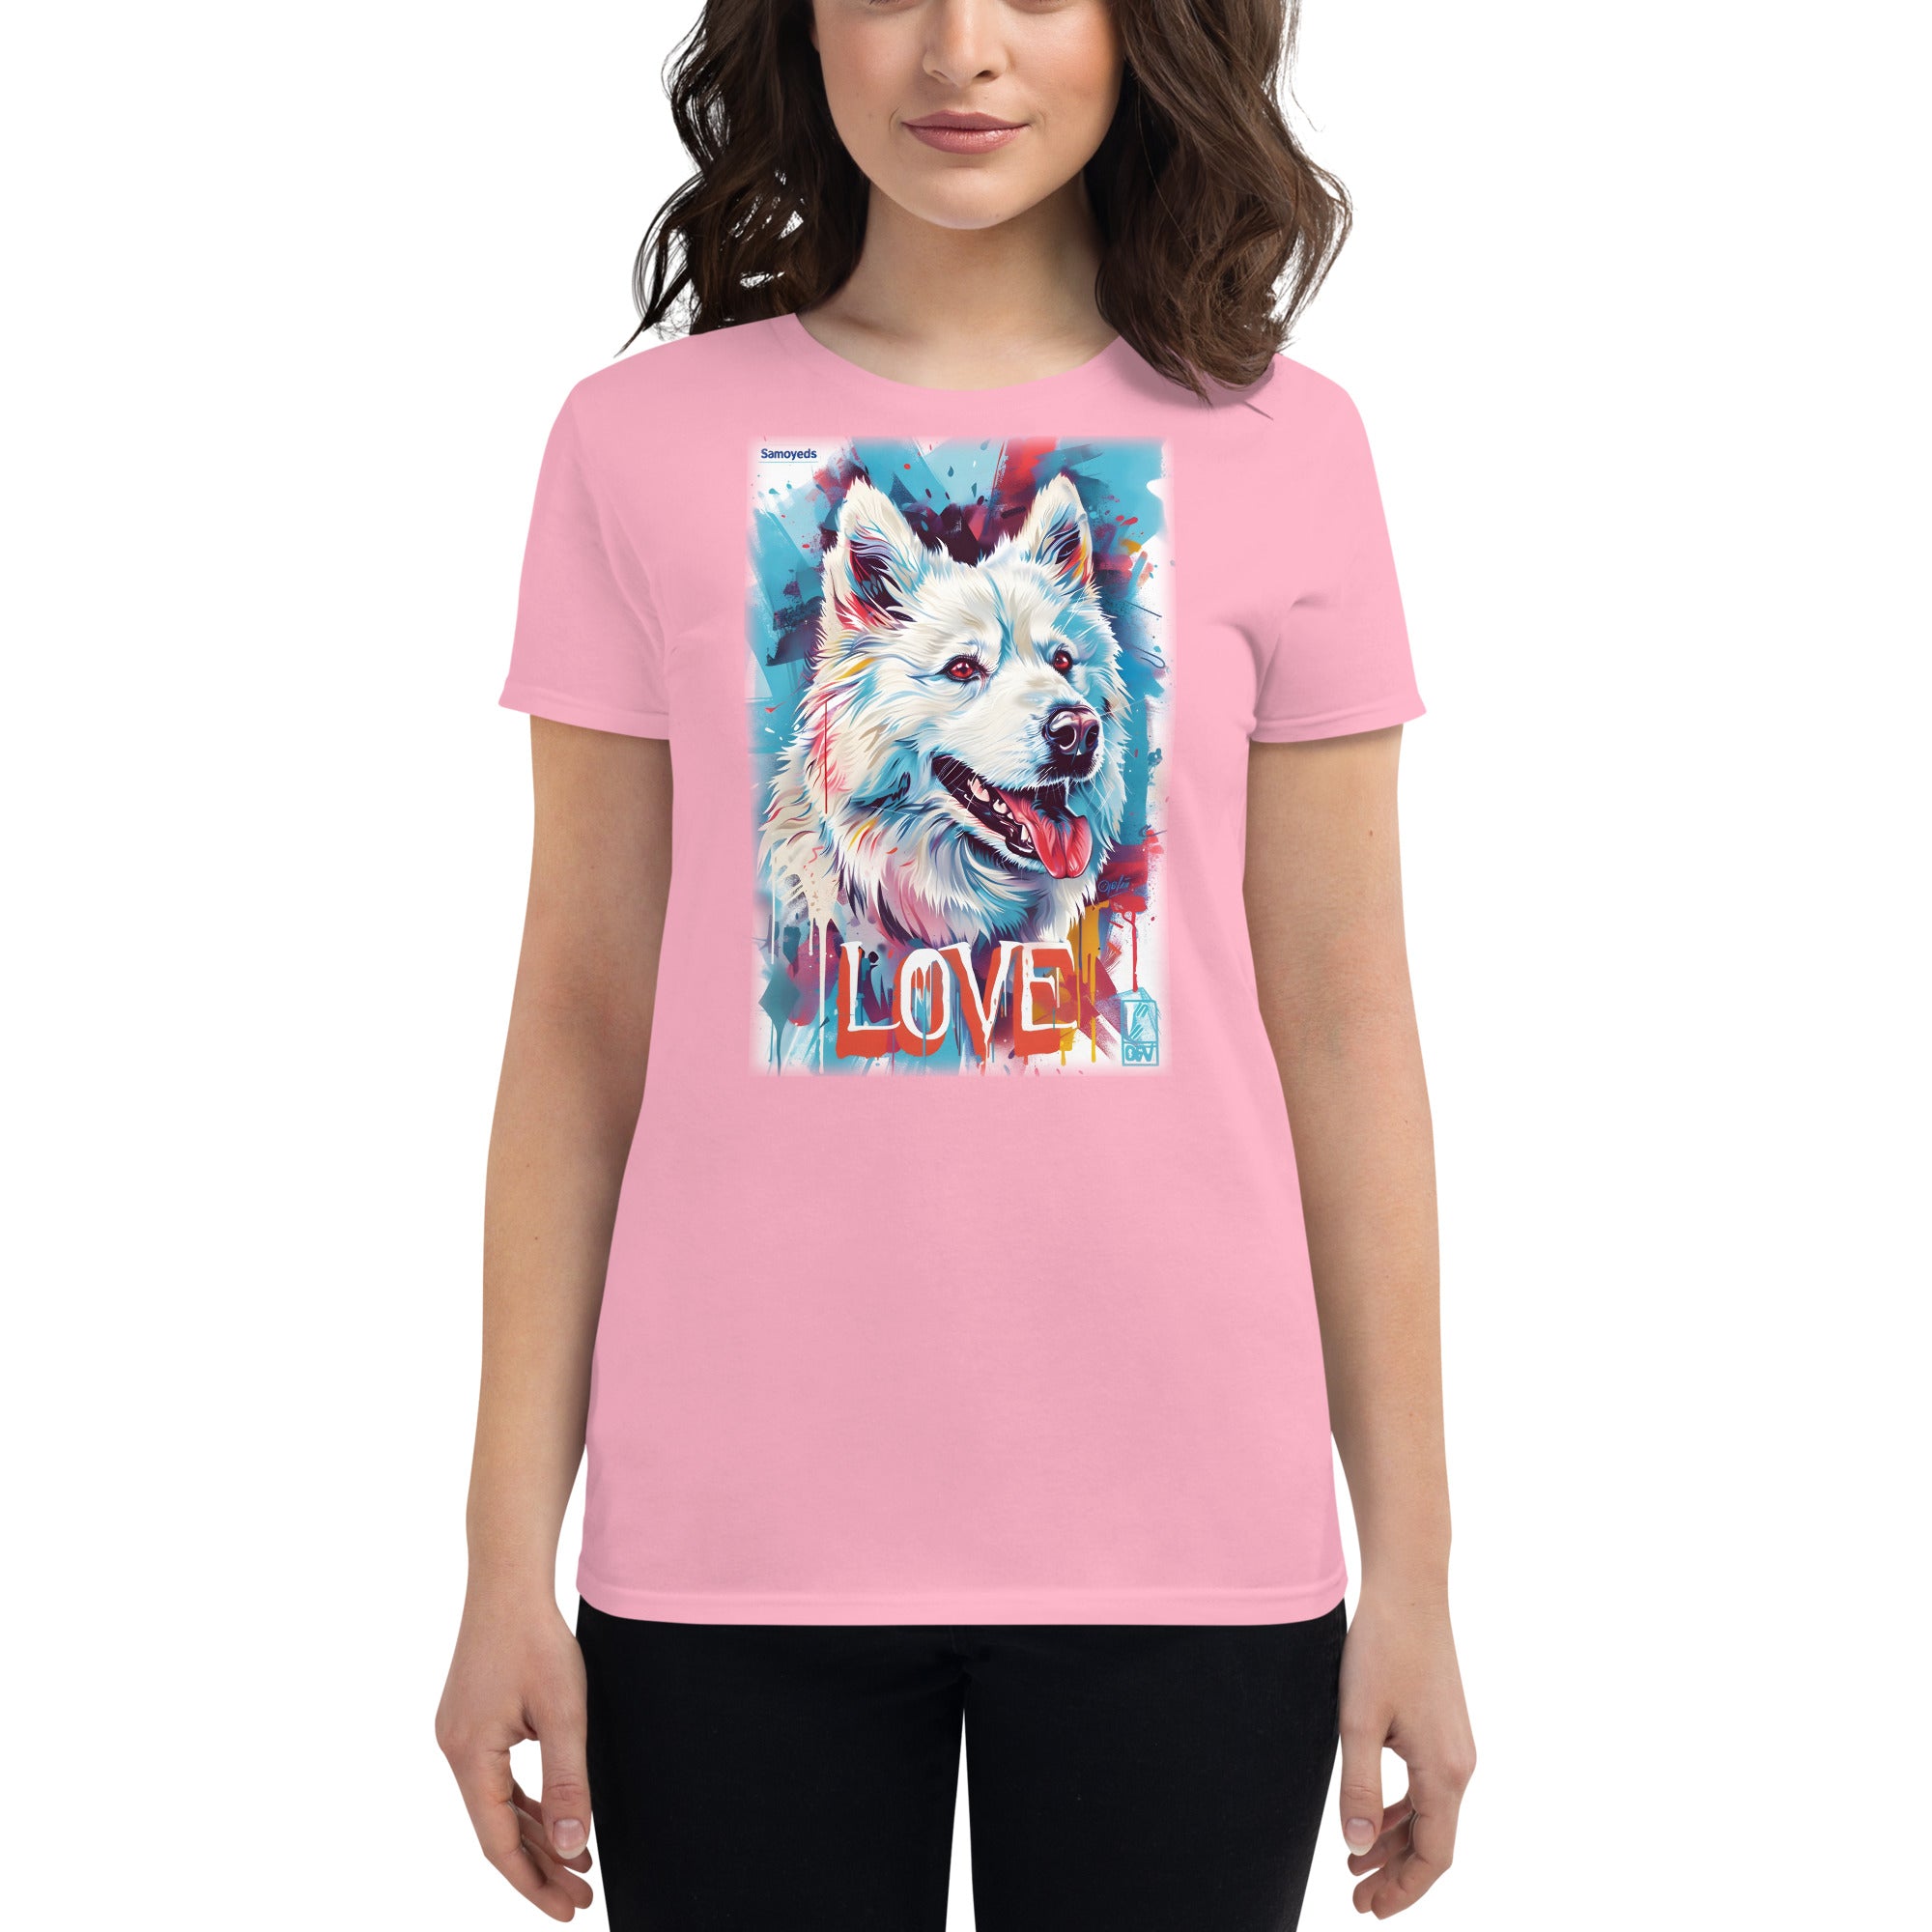 Samoyed Women's short sleeve t-shirt